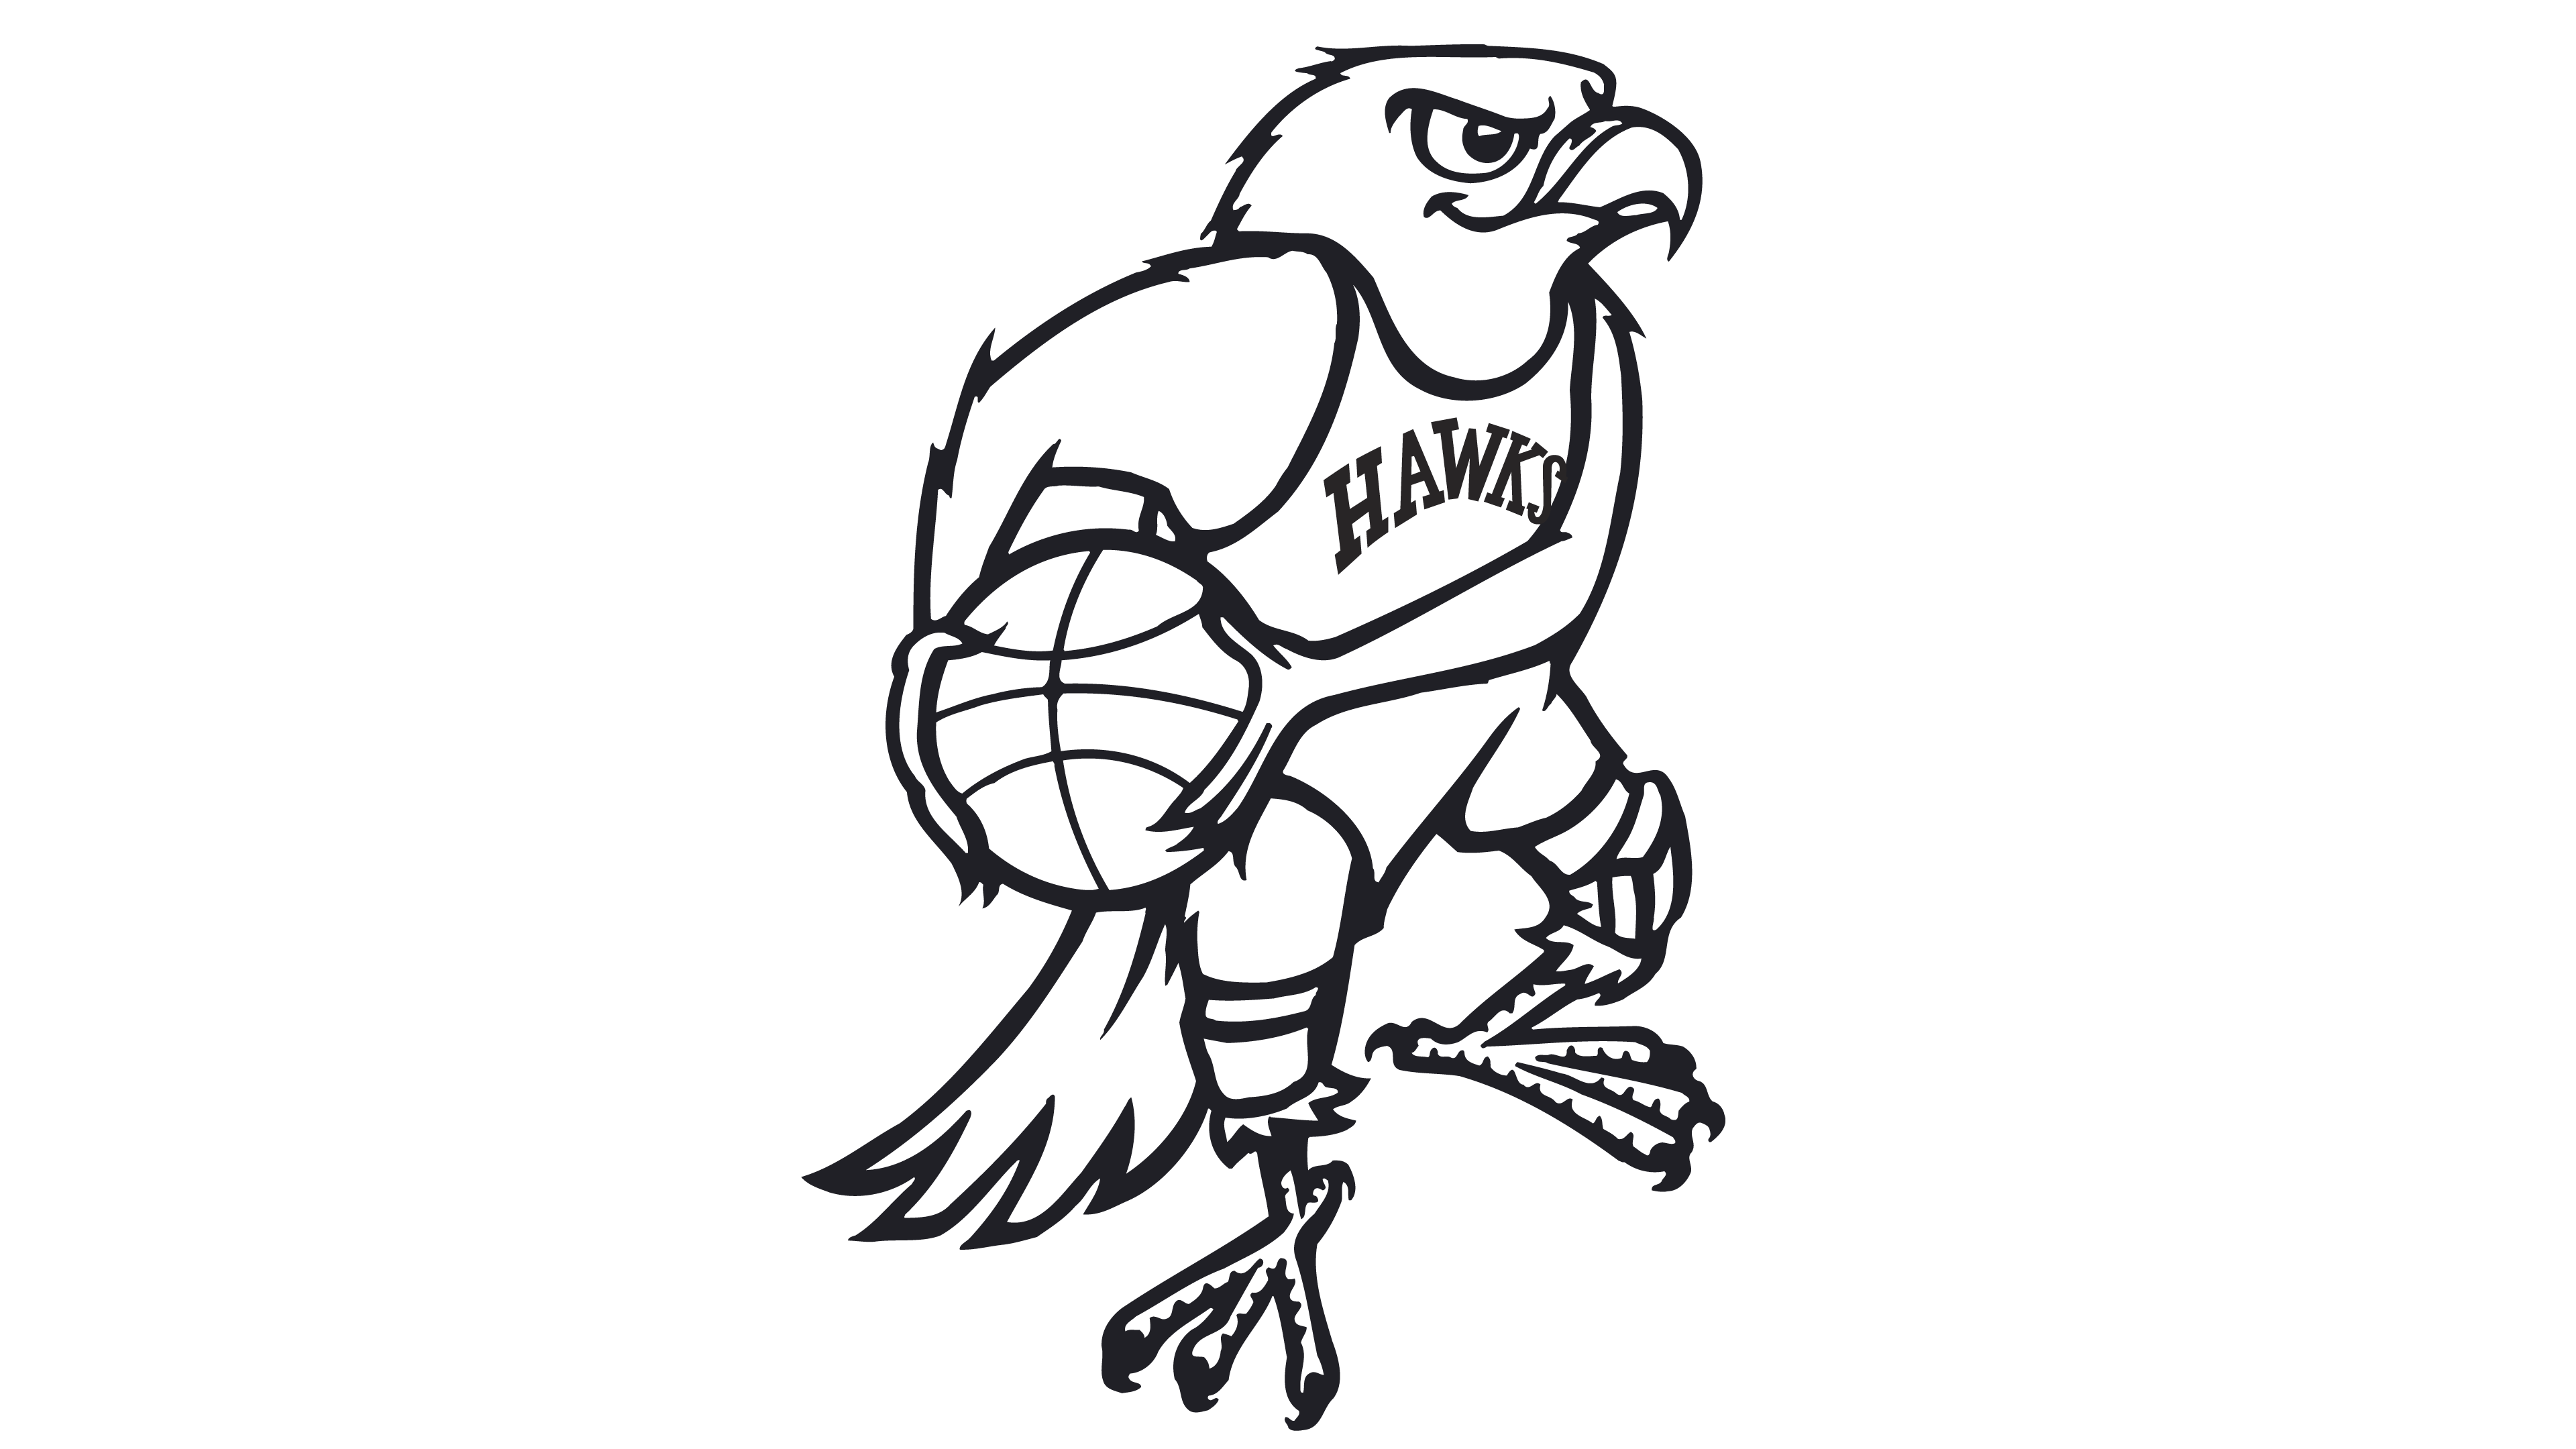 White Hawks Logo - Atlanta Hawks Logo History of the Team Name and emblem